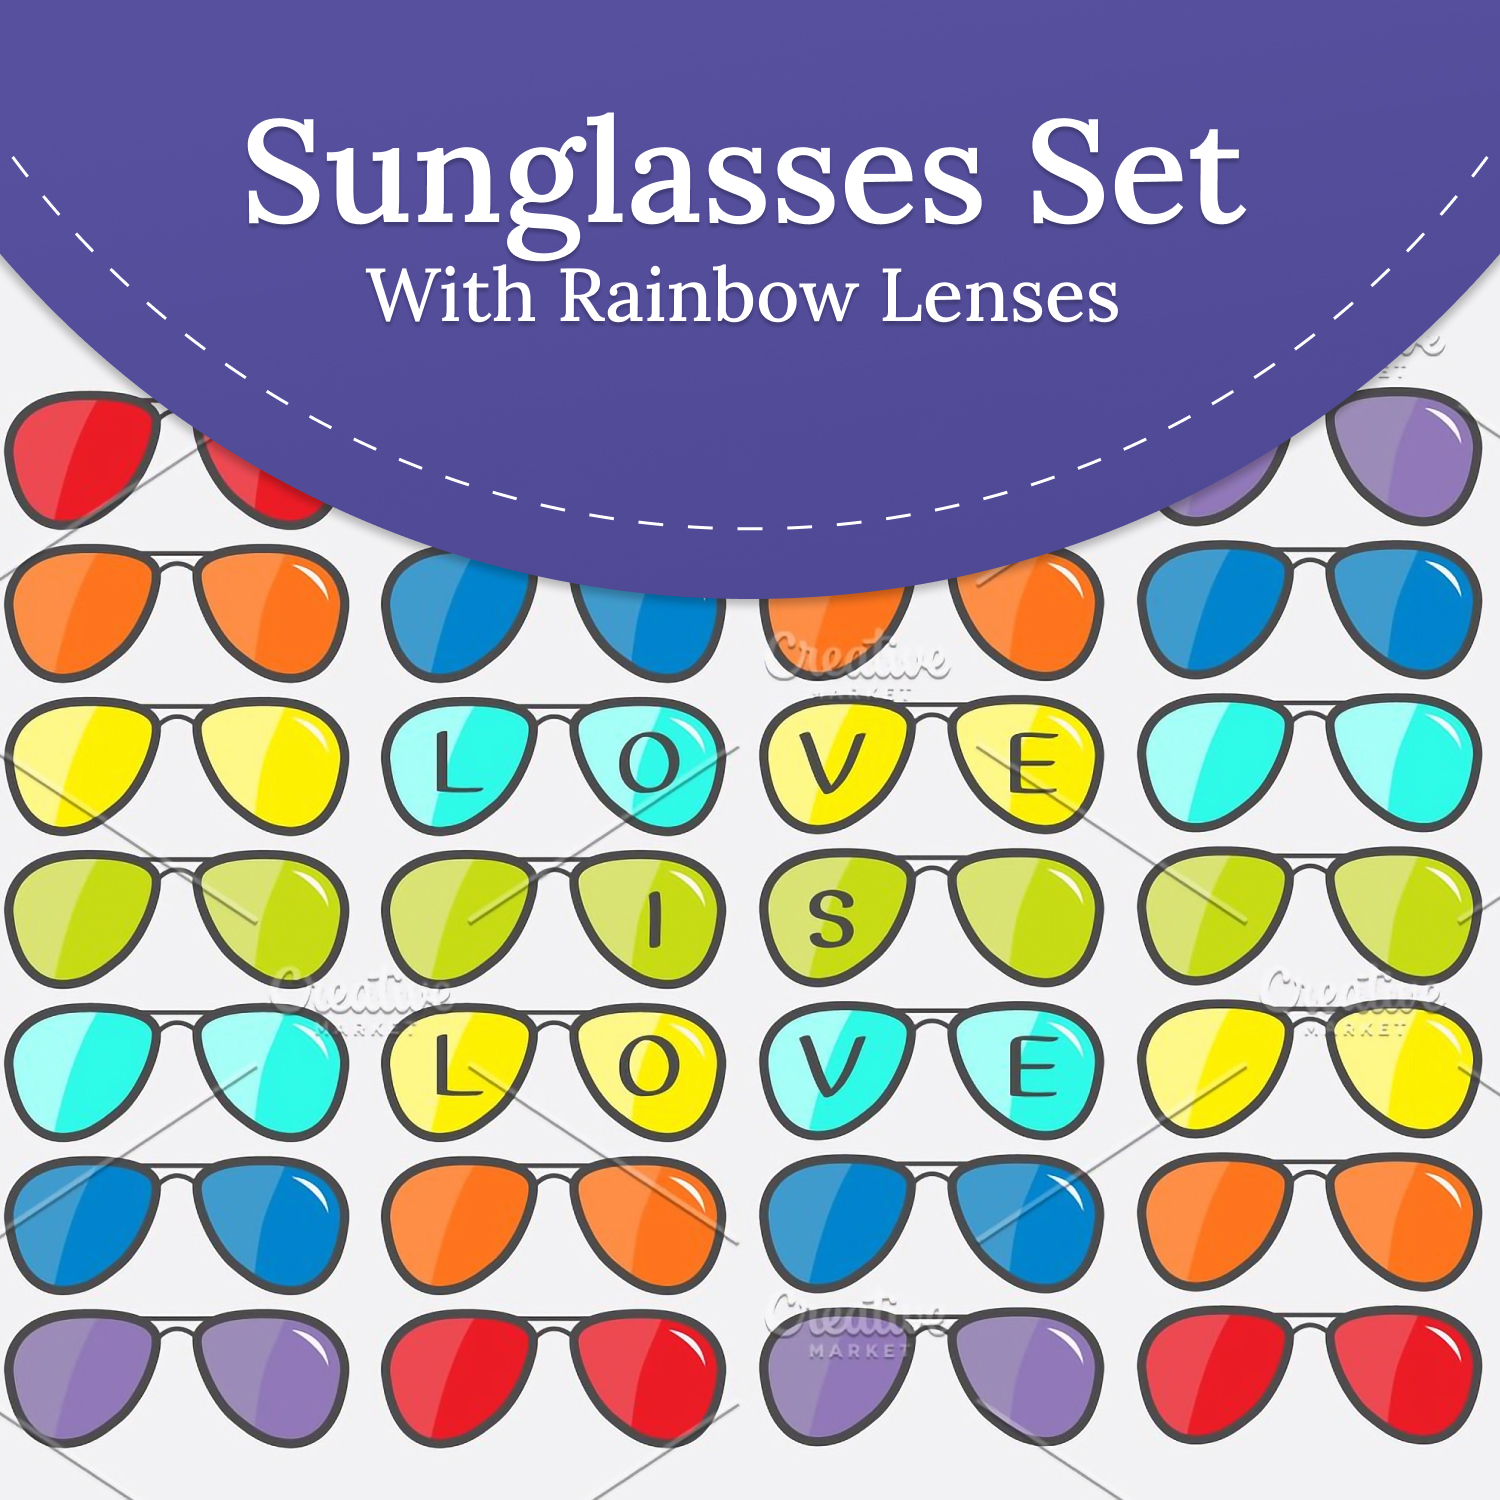 Sunglasses Set With Rainbow Lenses Main Cover.